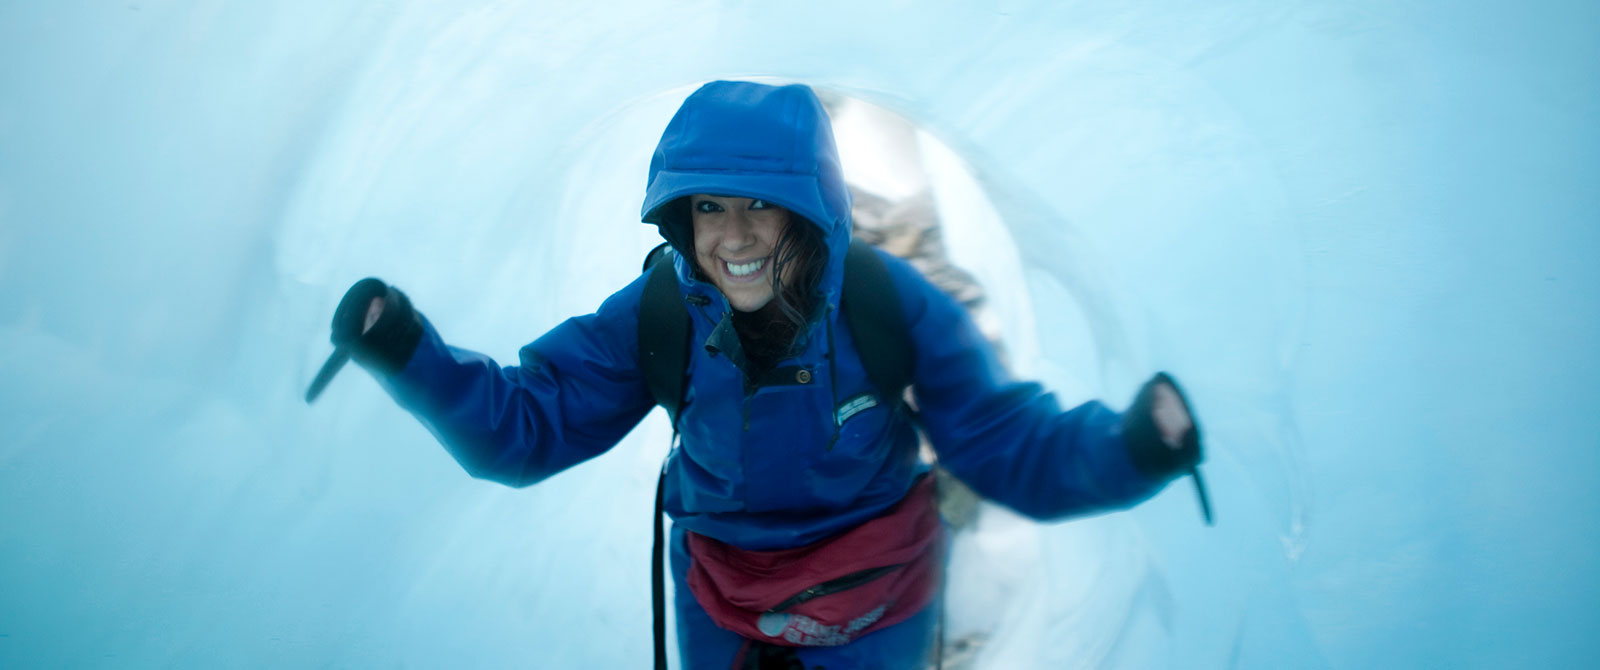 Heli Hiking on West Coast Glaciers - Book Your Trip to New Zealand - New Zealand Travel Agency